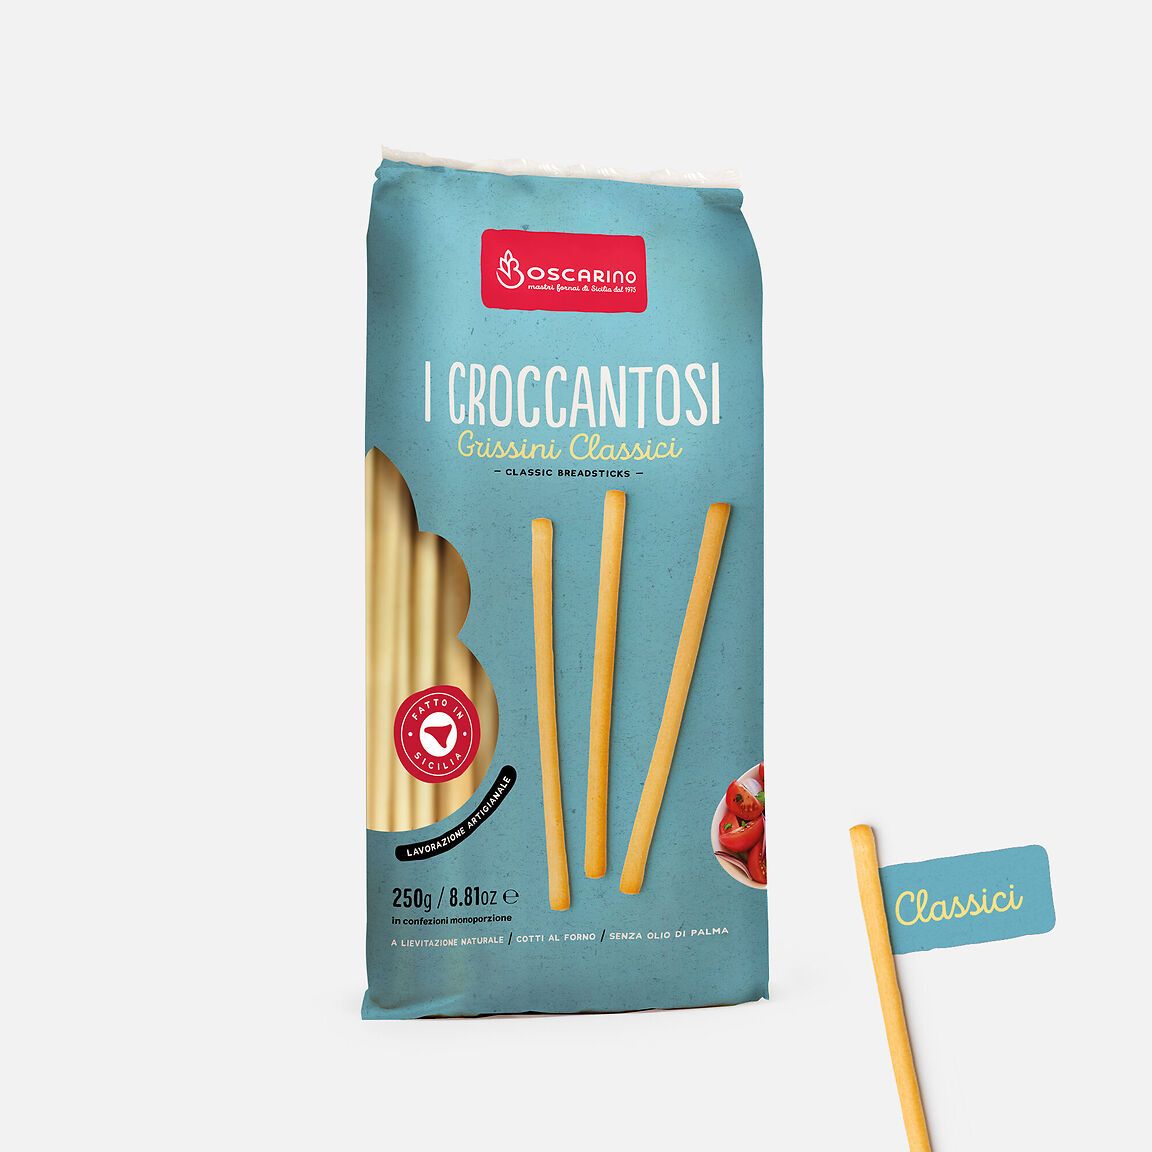 Packaging linea Croccantosi Boscarino